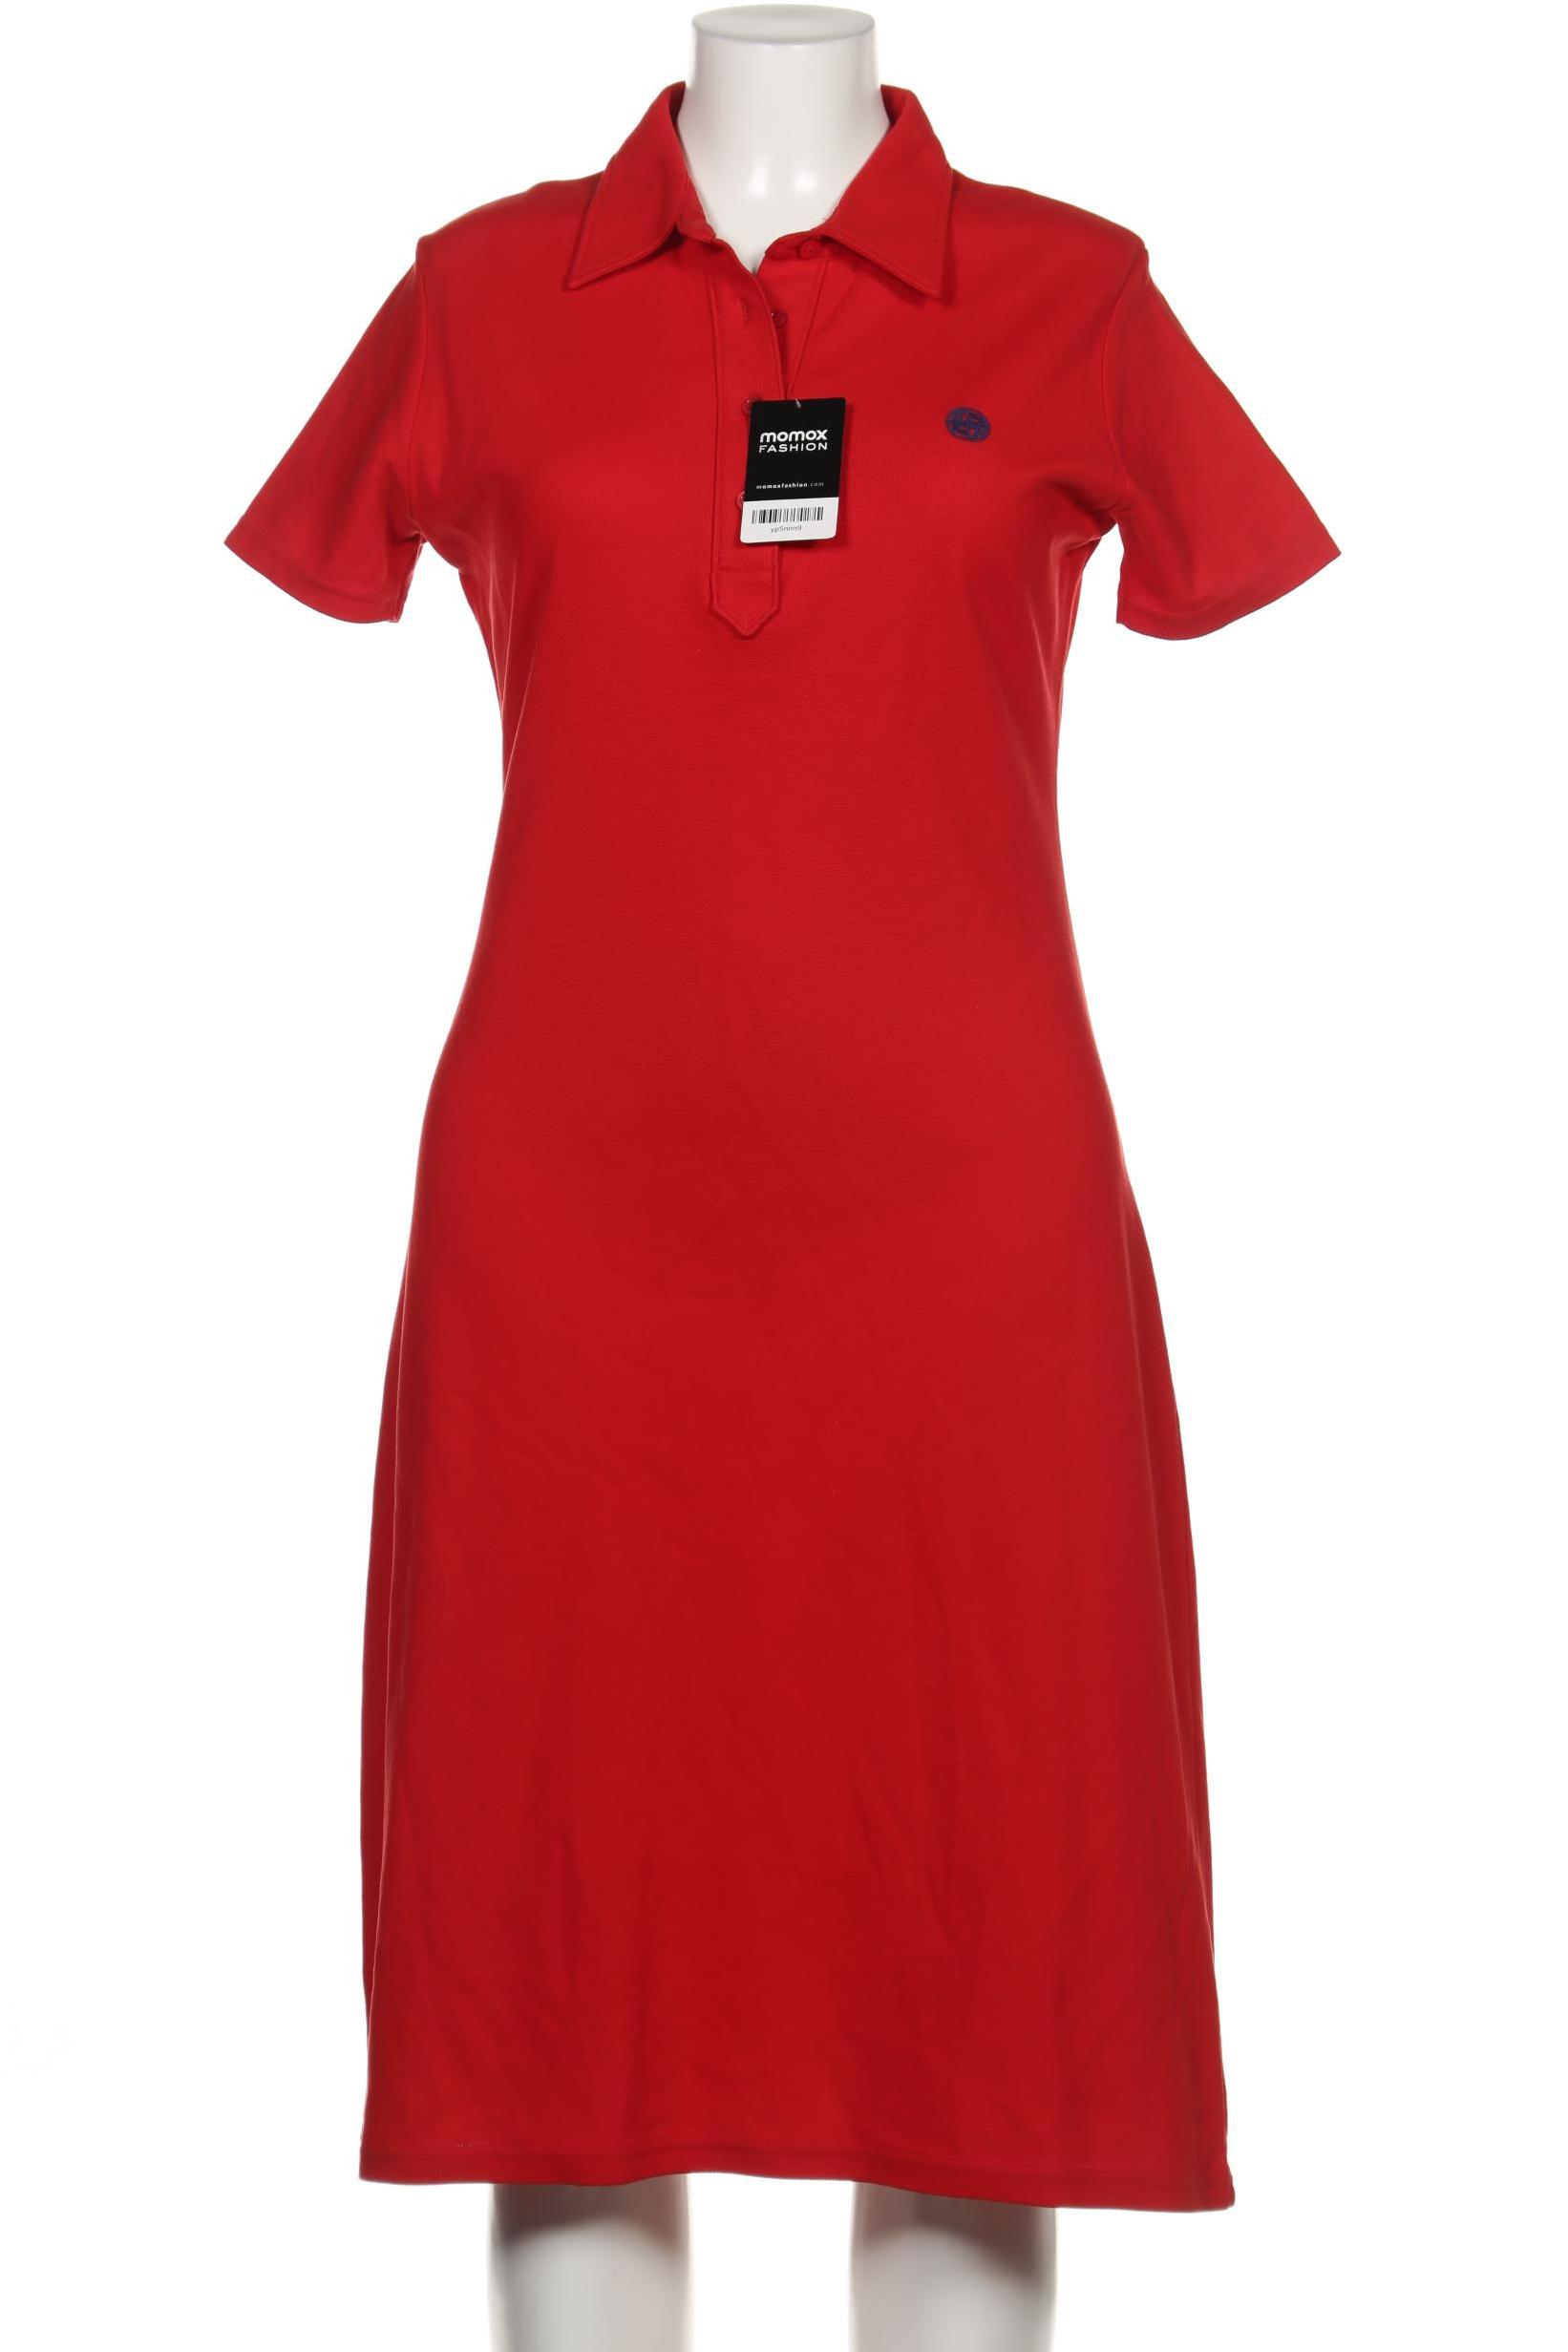 Rene Lezard Damen Kleid, rot von Rene Lezard